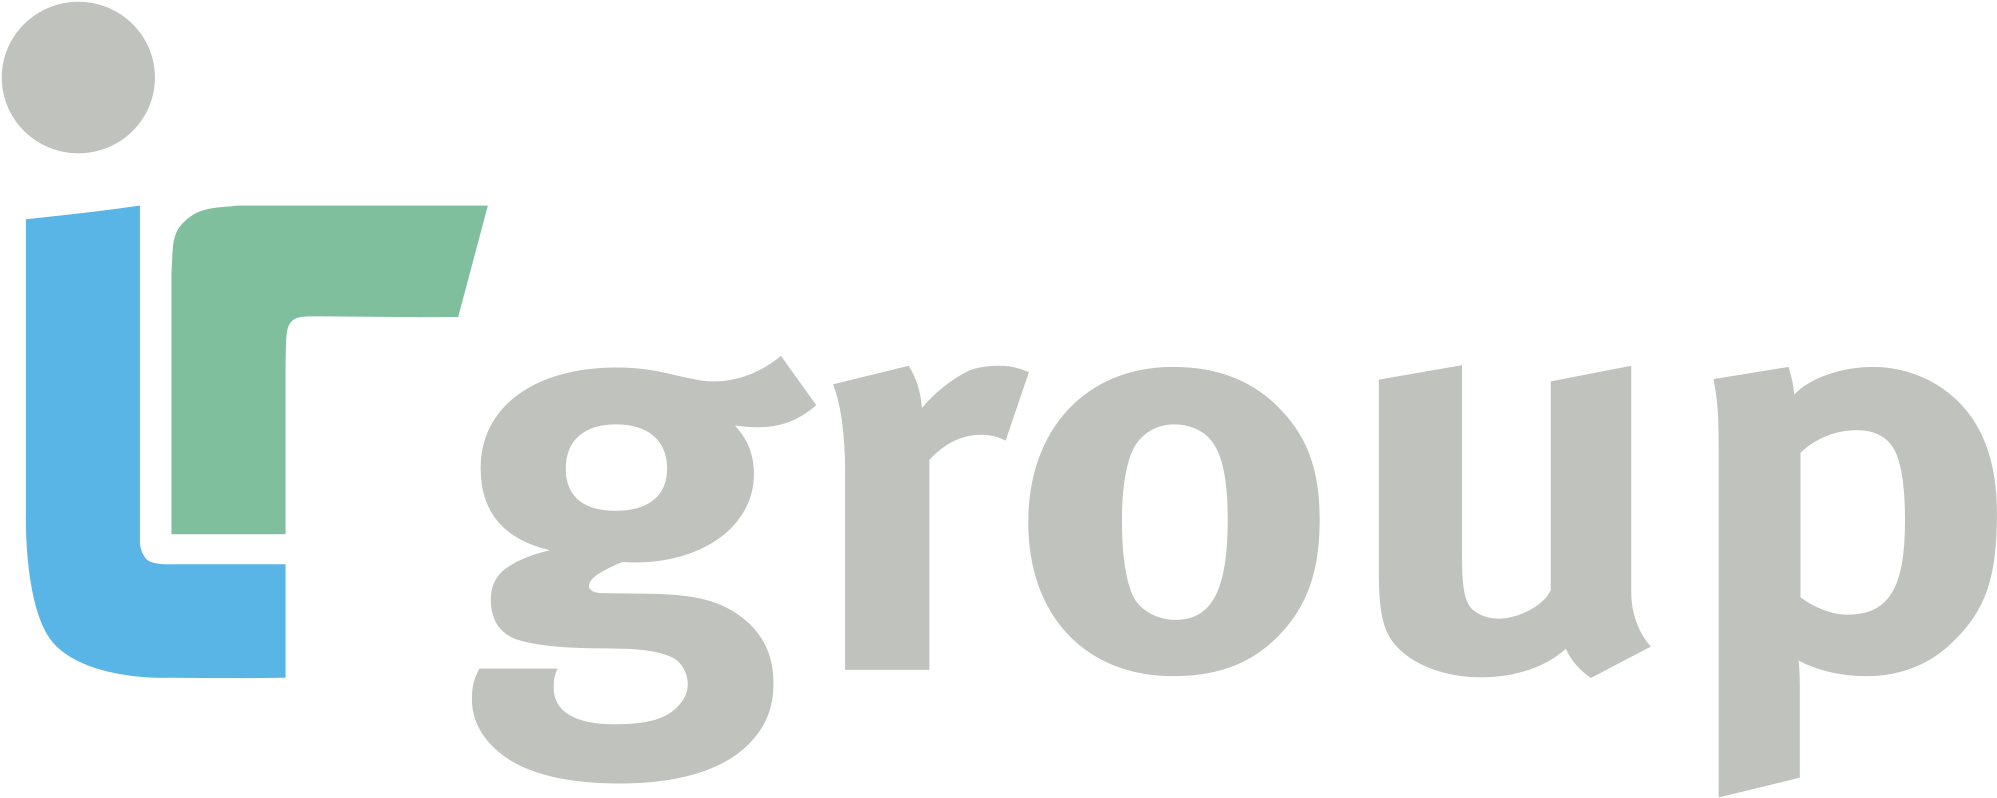 C f group. Логотип is Group. 101-Group логотип. Be Group. Lares Group логотип.